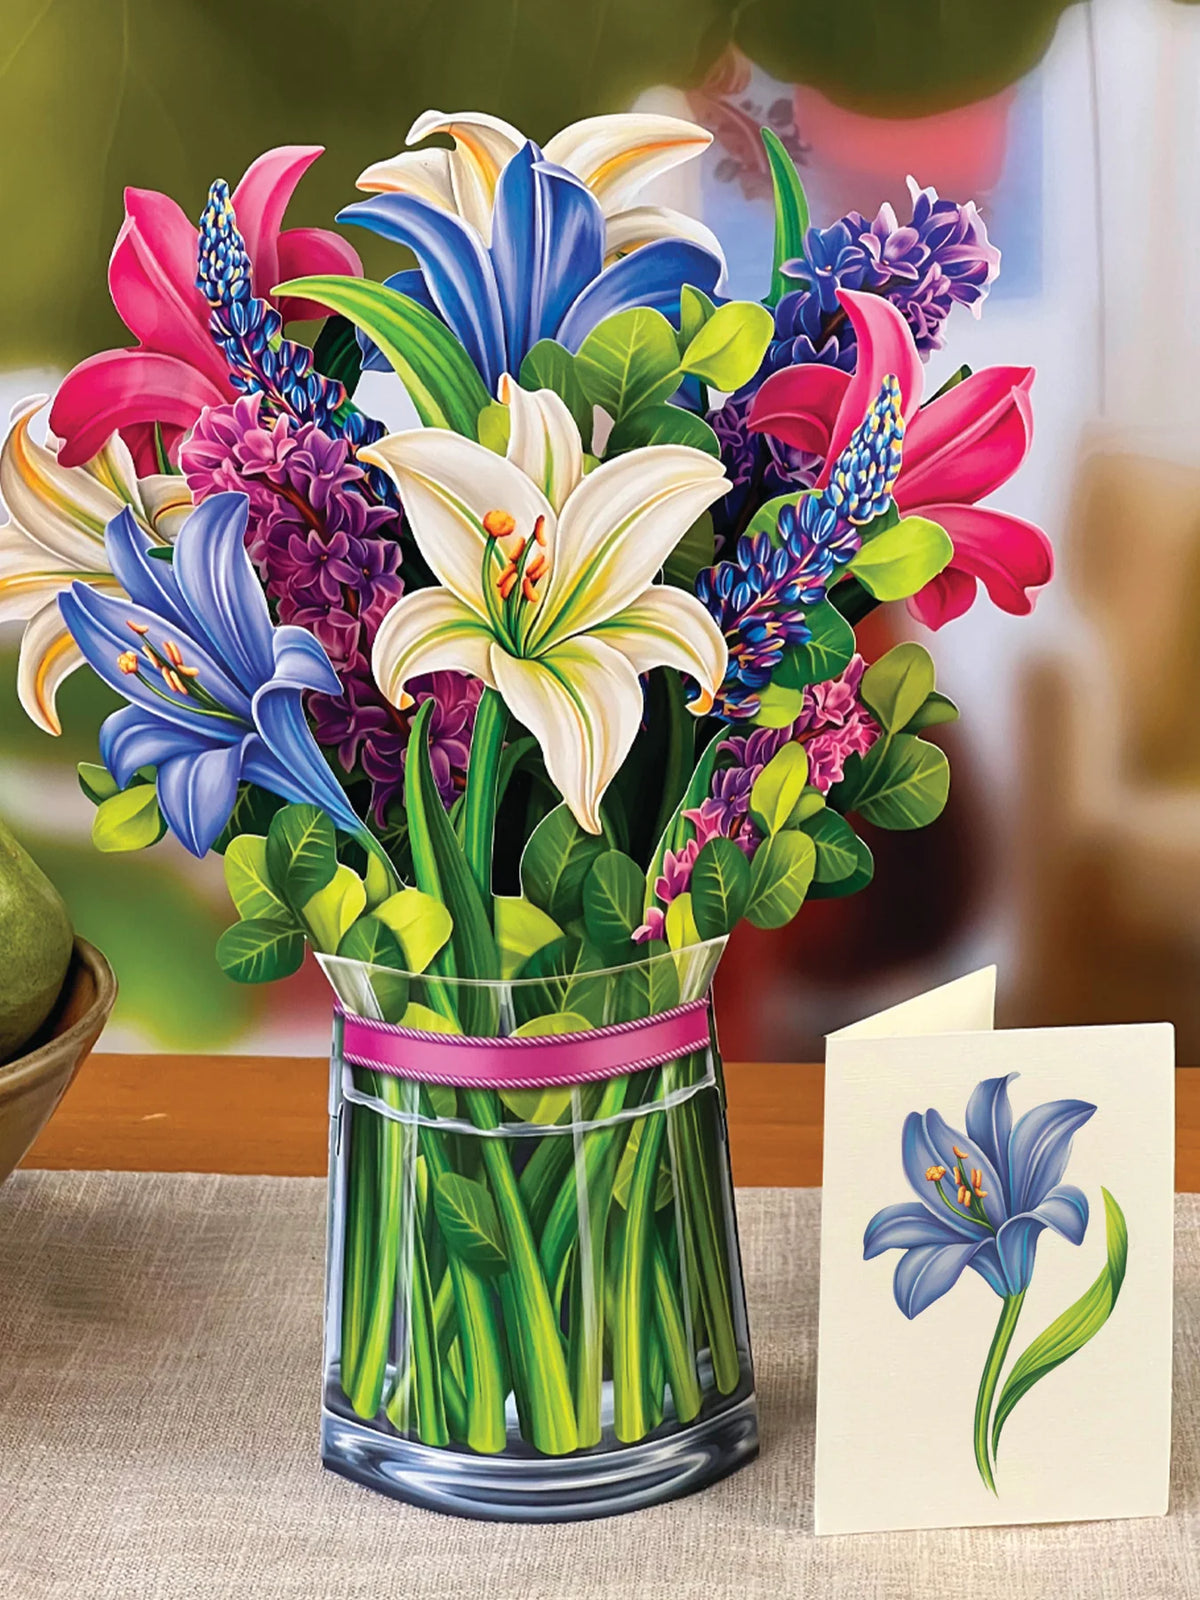 FreshCut Flowers Pop-Up Greeting Card